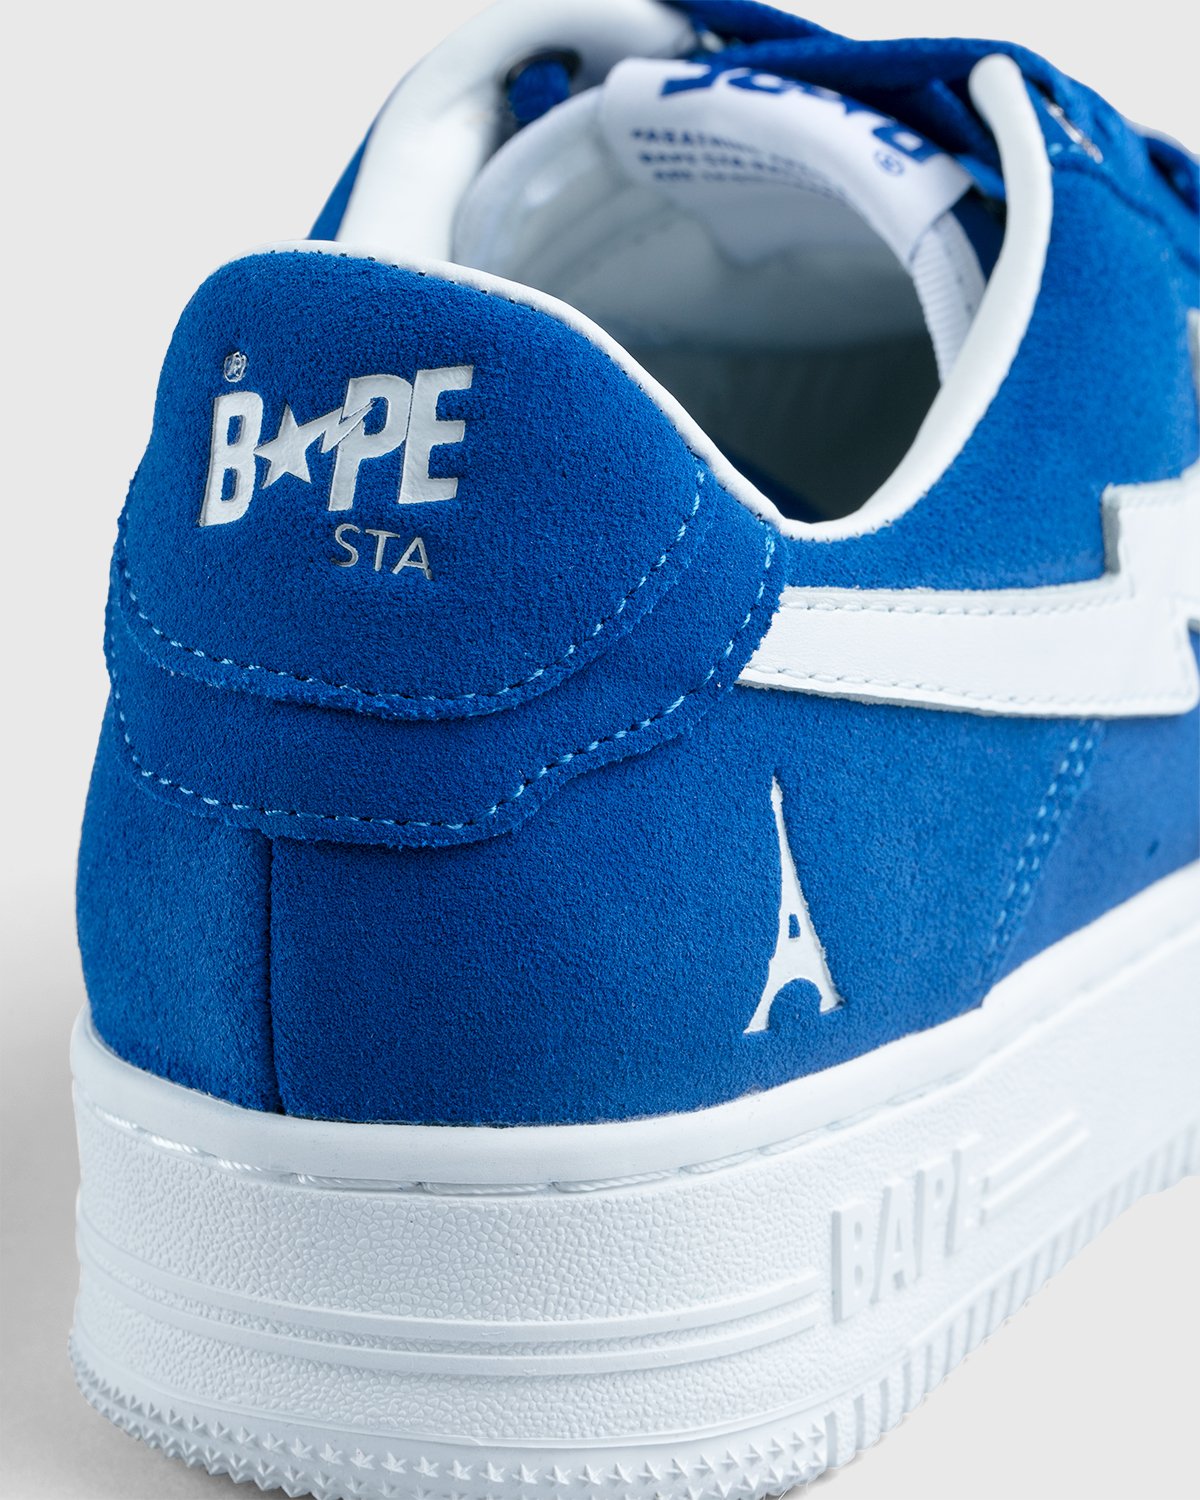 BAPE x Highsnobiety - BAPE STA Blue - Footwear - Blue - Image 6